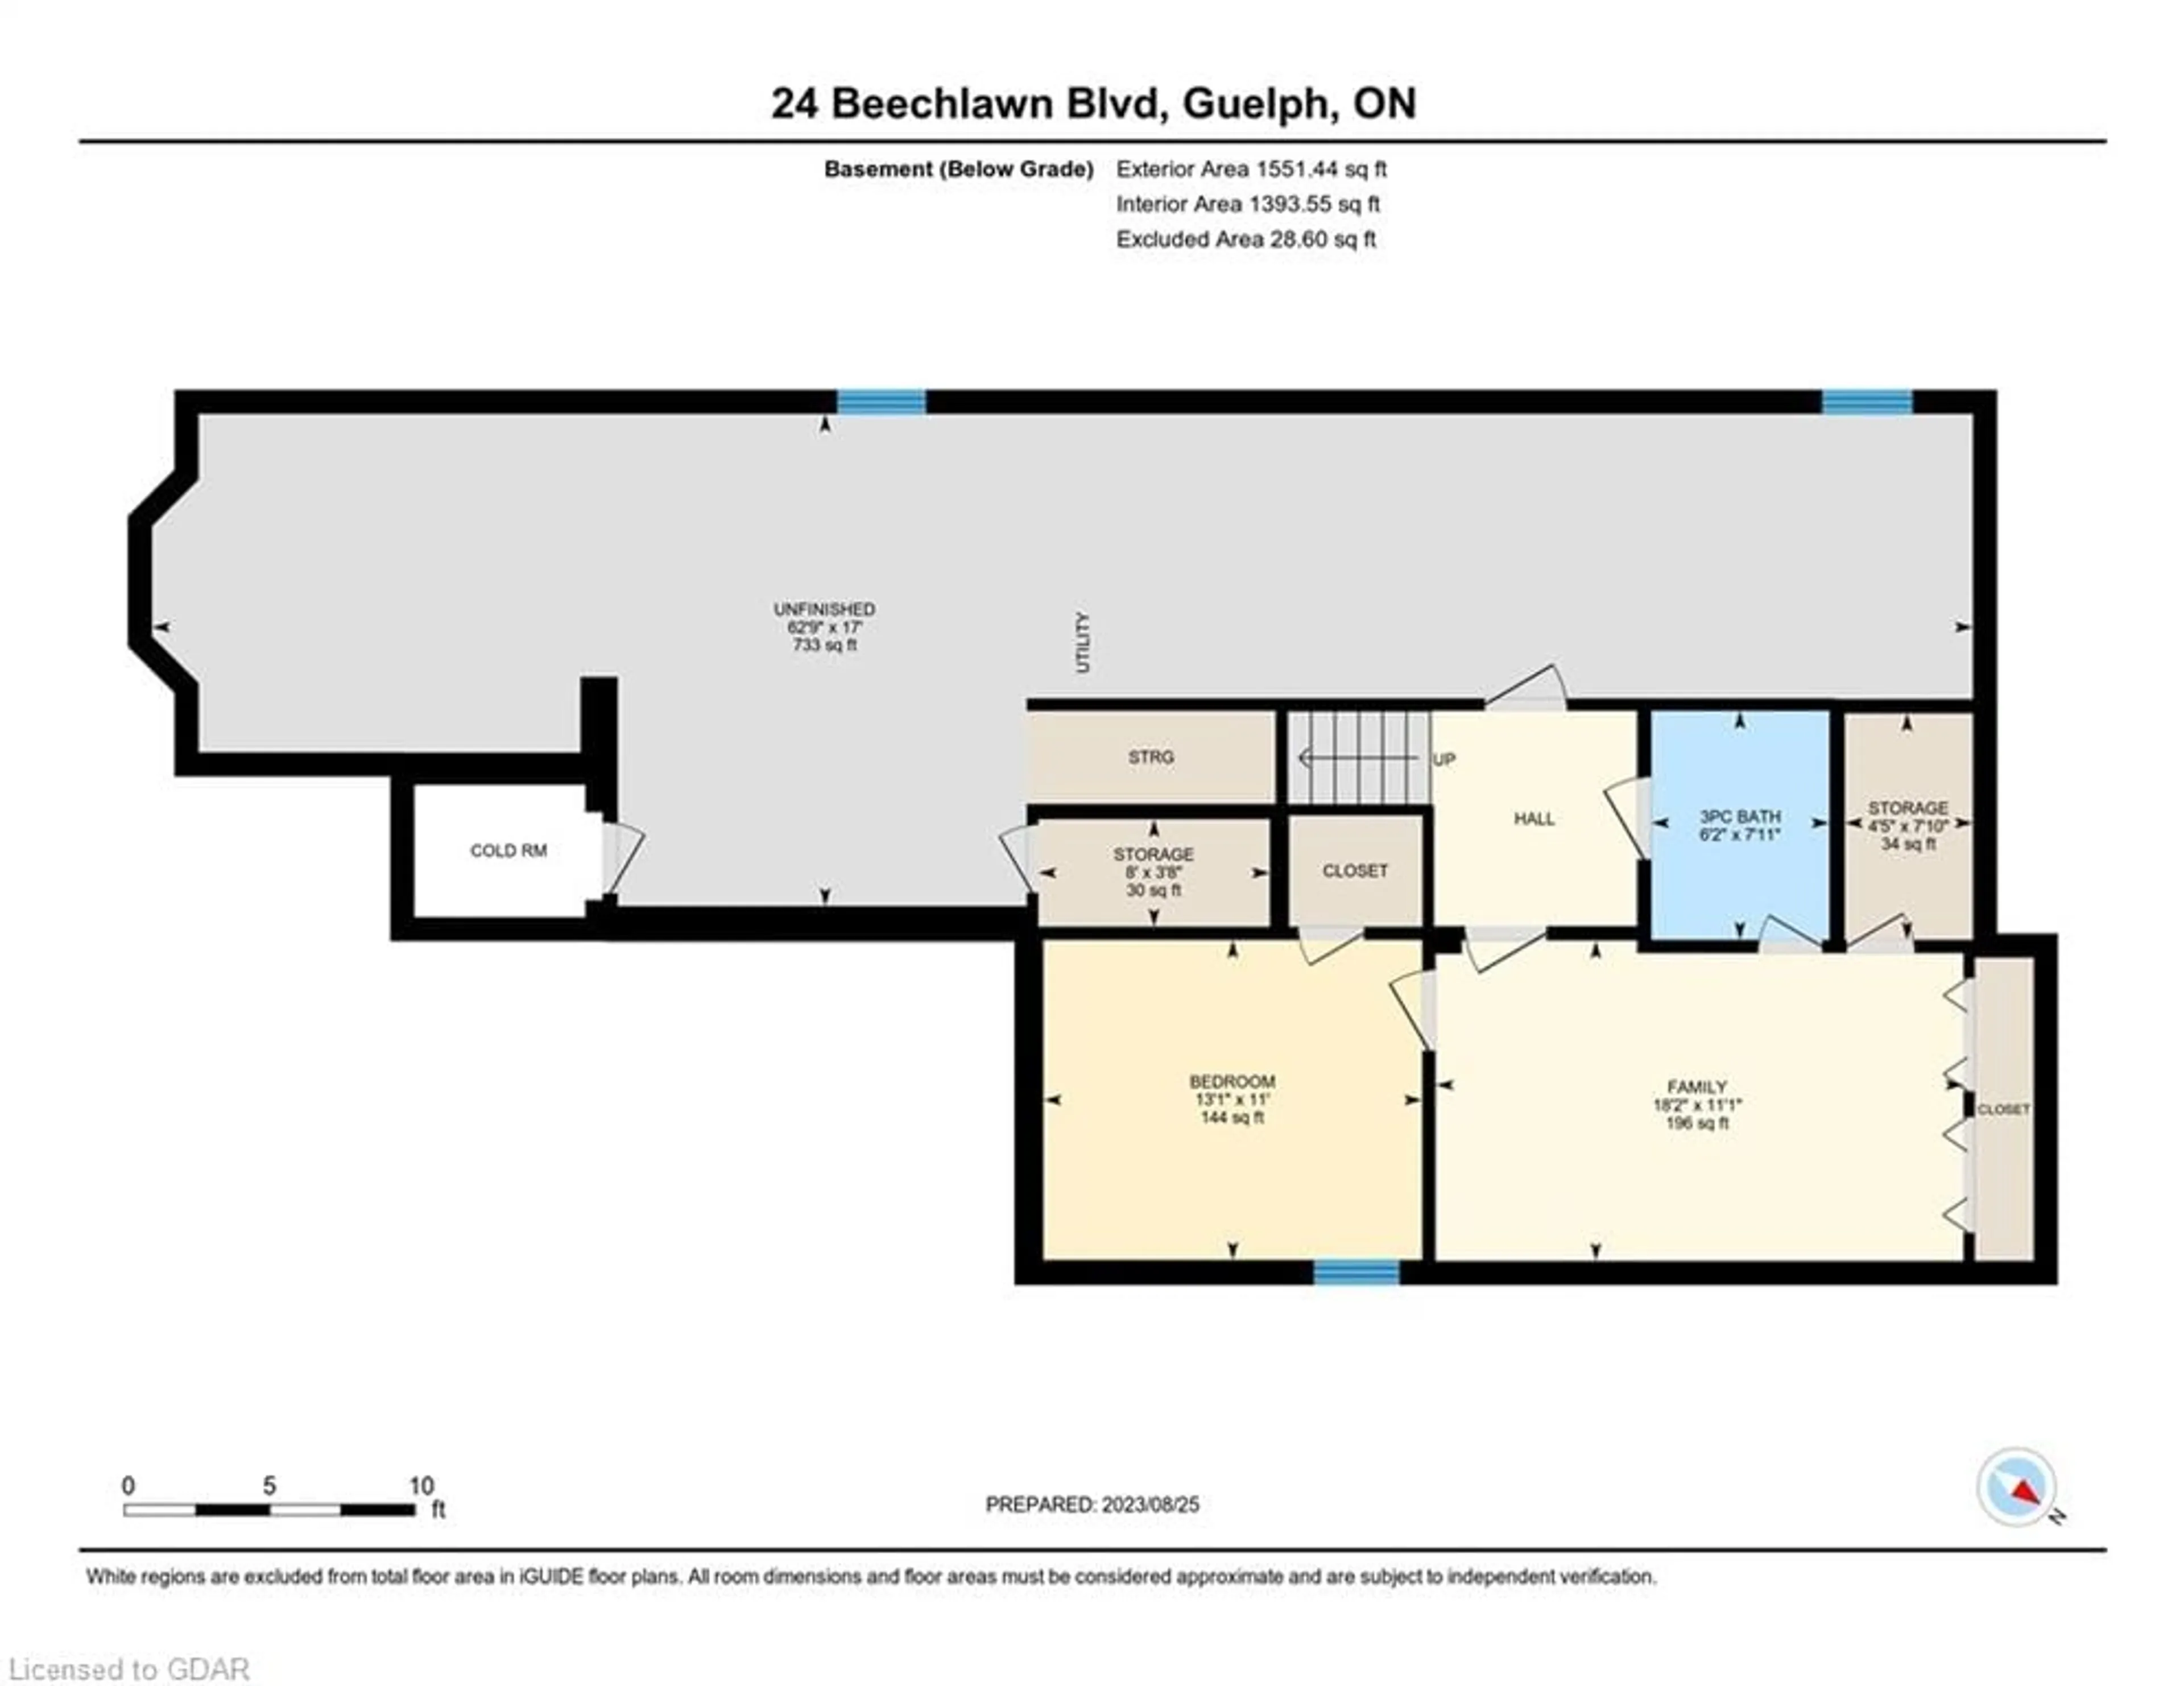 Floor plan for 24 Beechlawn Blvd, Guelph Ontario N1G 4X7